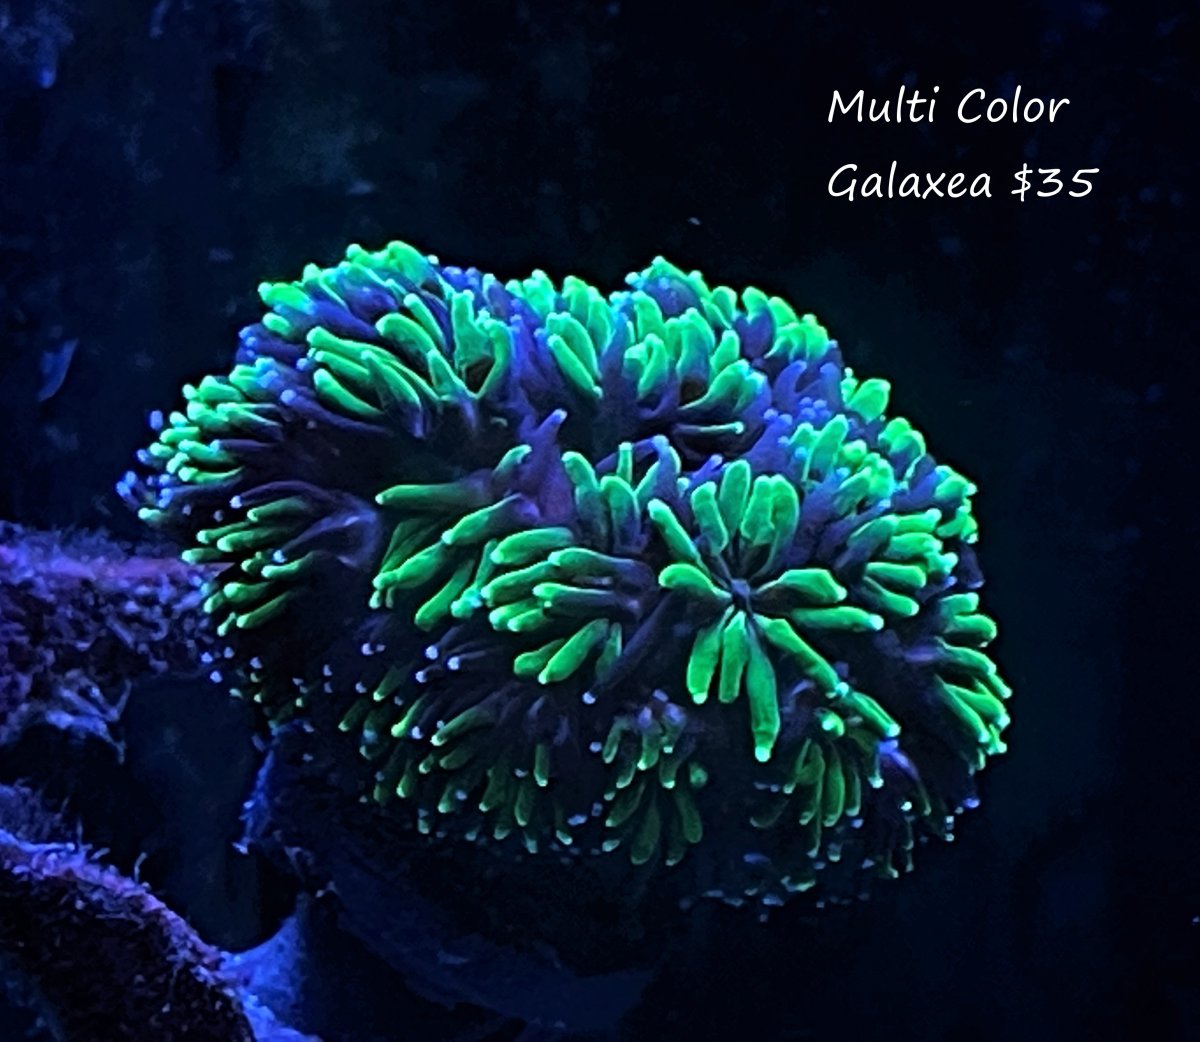 multi color galaxea $35.jpg